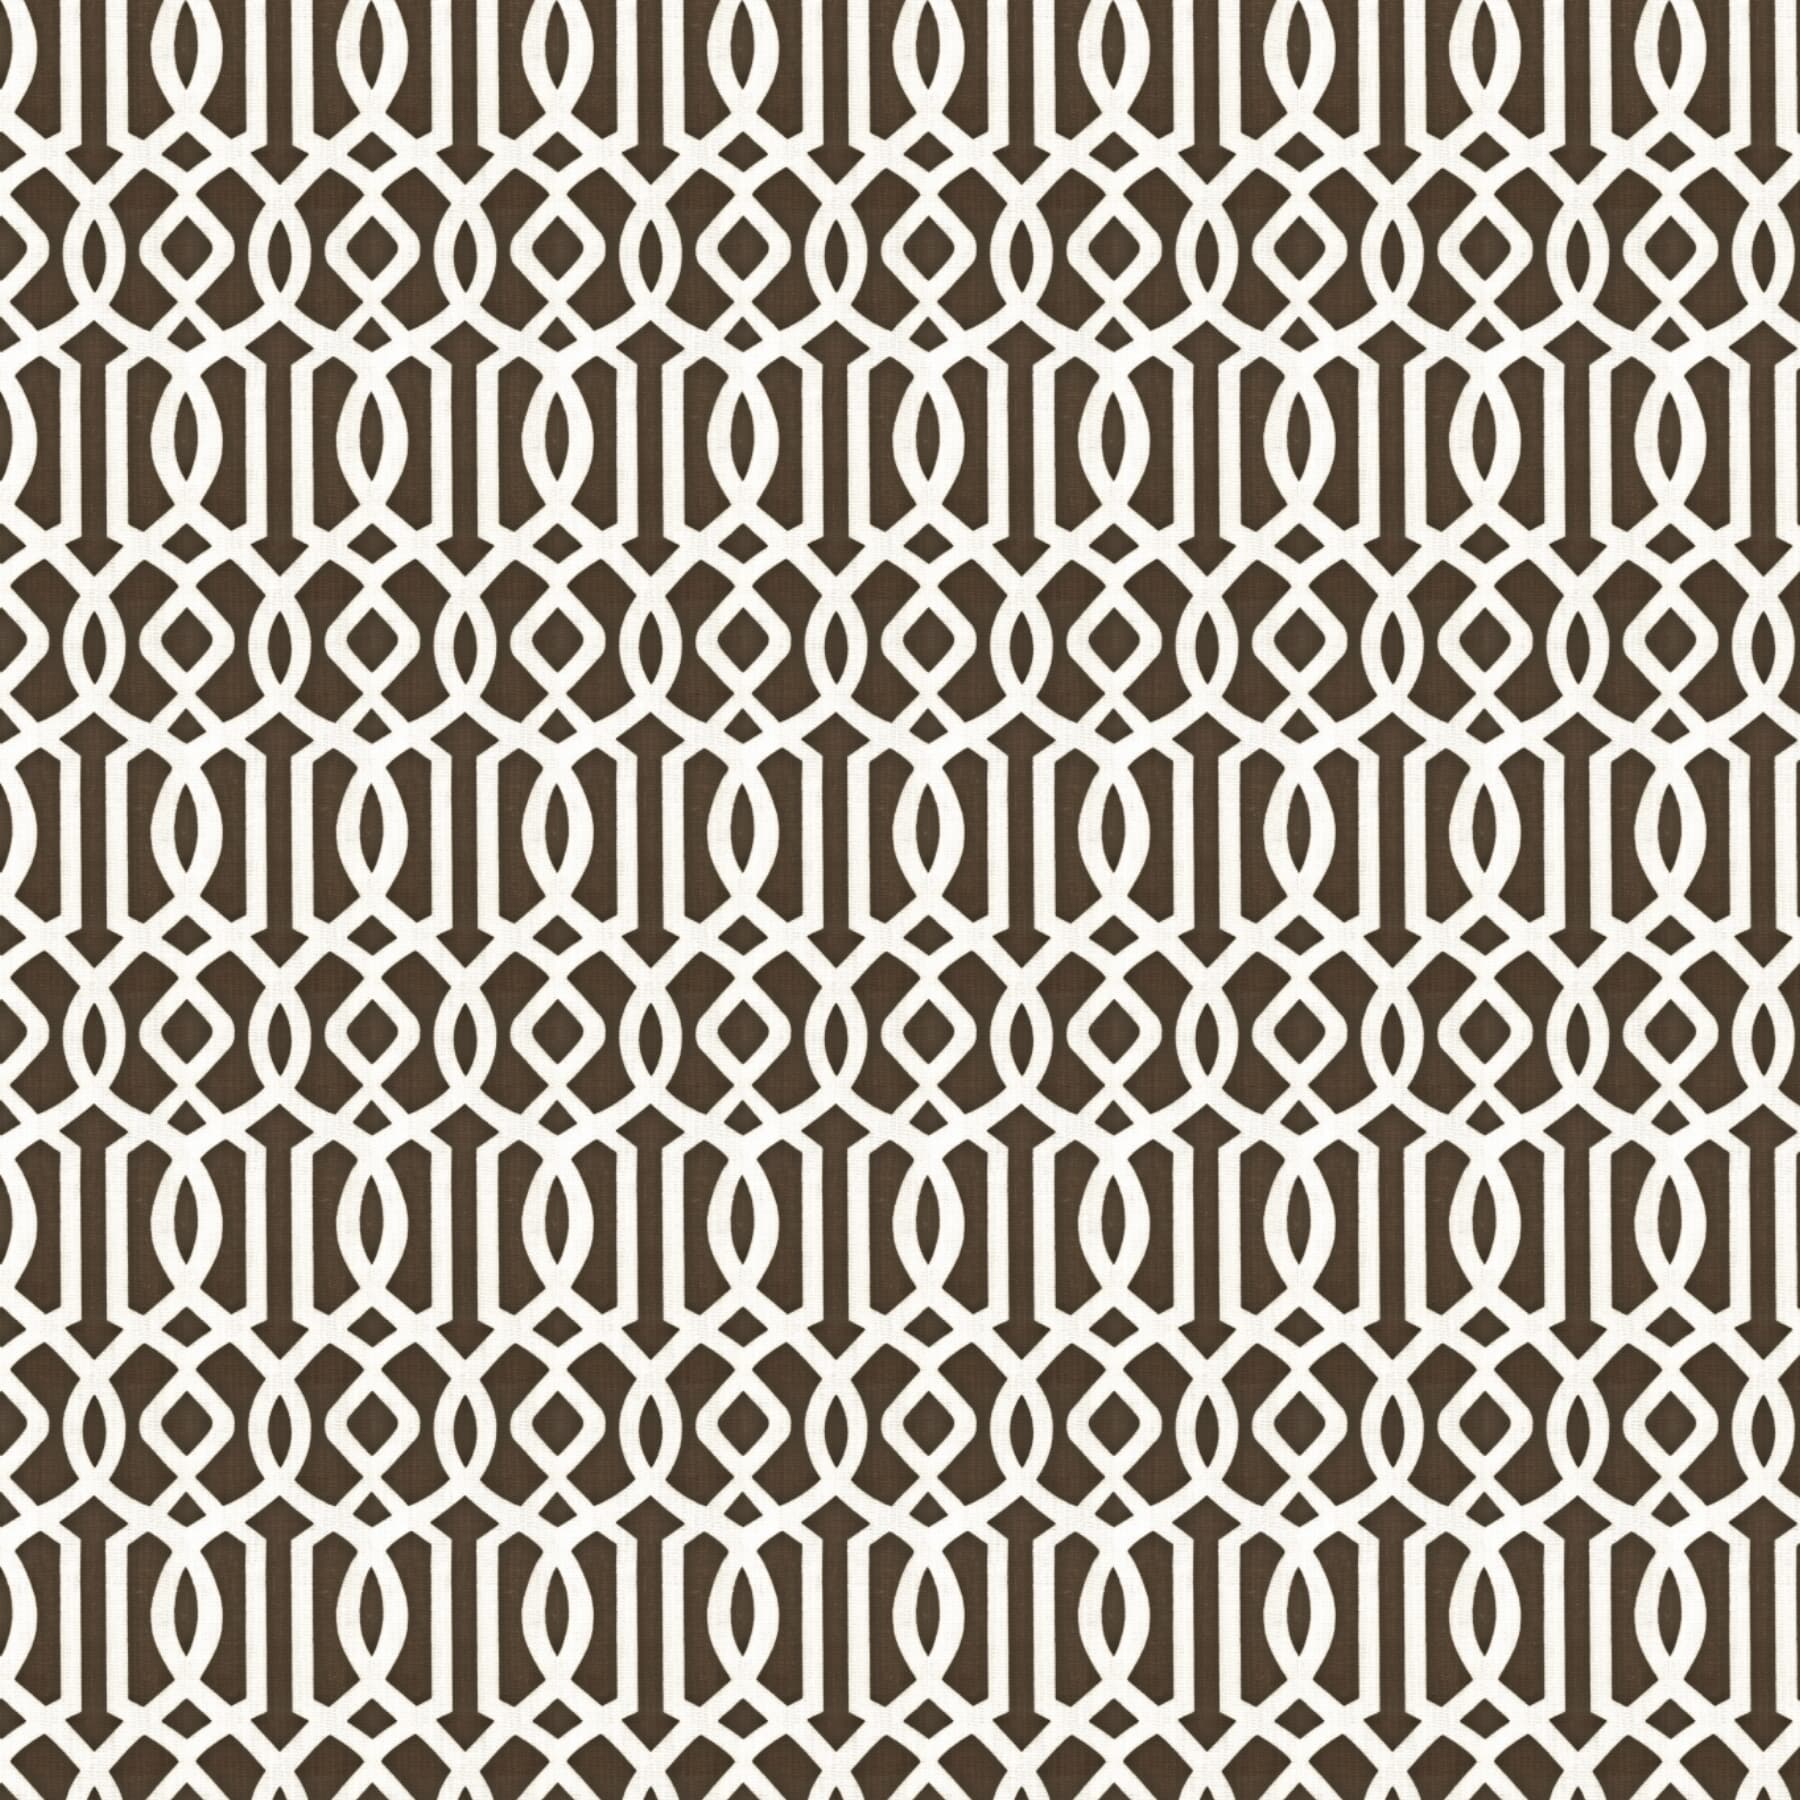 7694-11 Interlachen Scroll by Stout Fabric